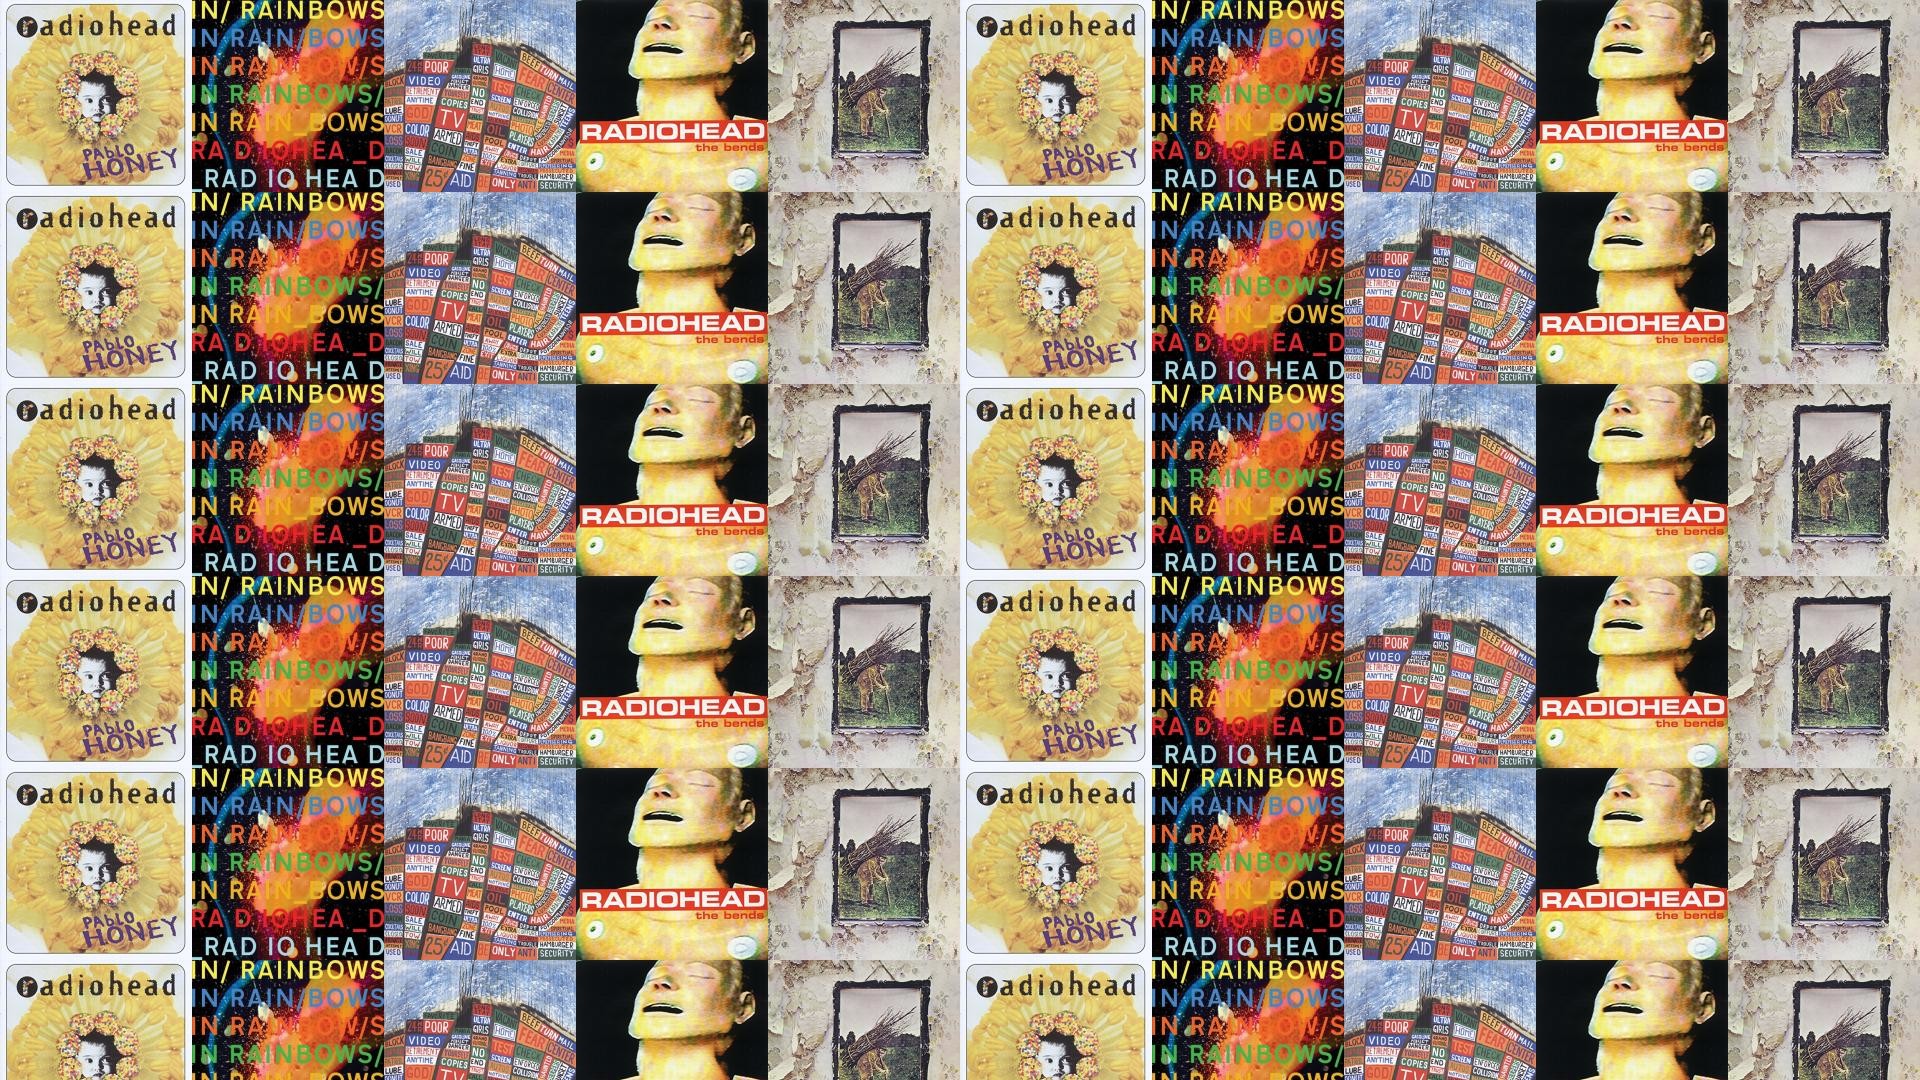 1920x1080 Radiohead Pablo Honey In Rainbows Hail To Thief Wallpaper Â« Tiled Desktop  Wallpaper